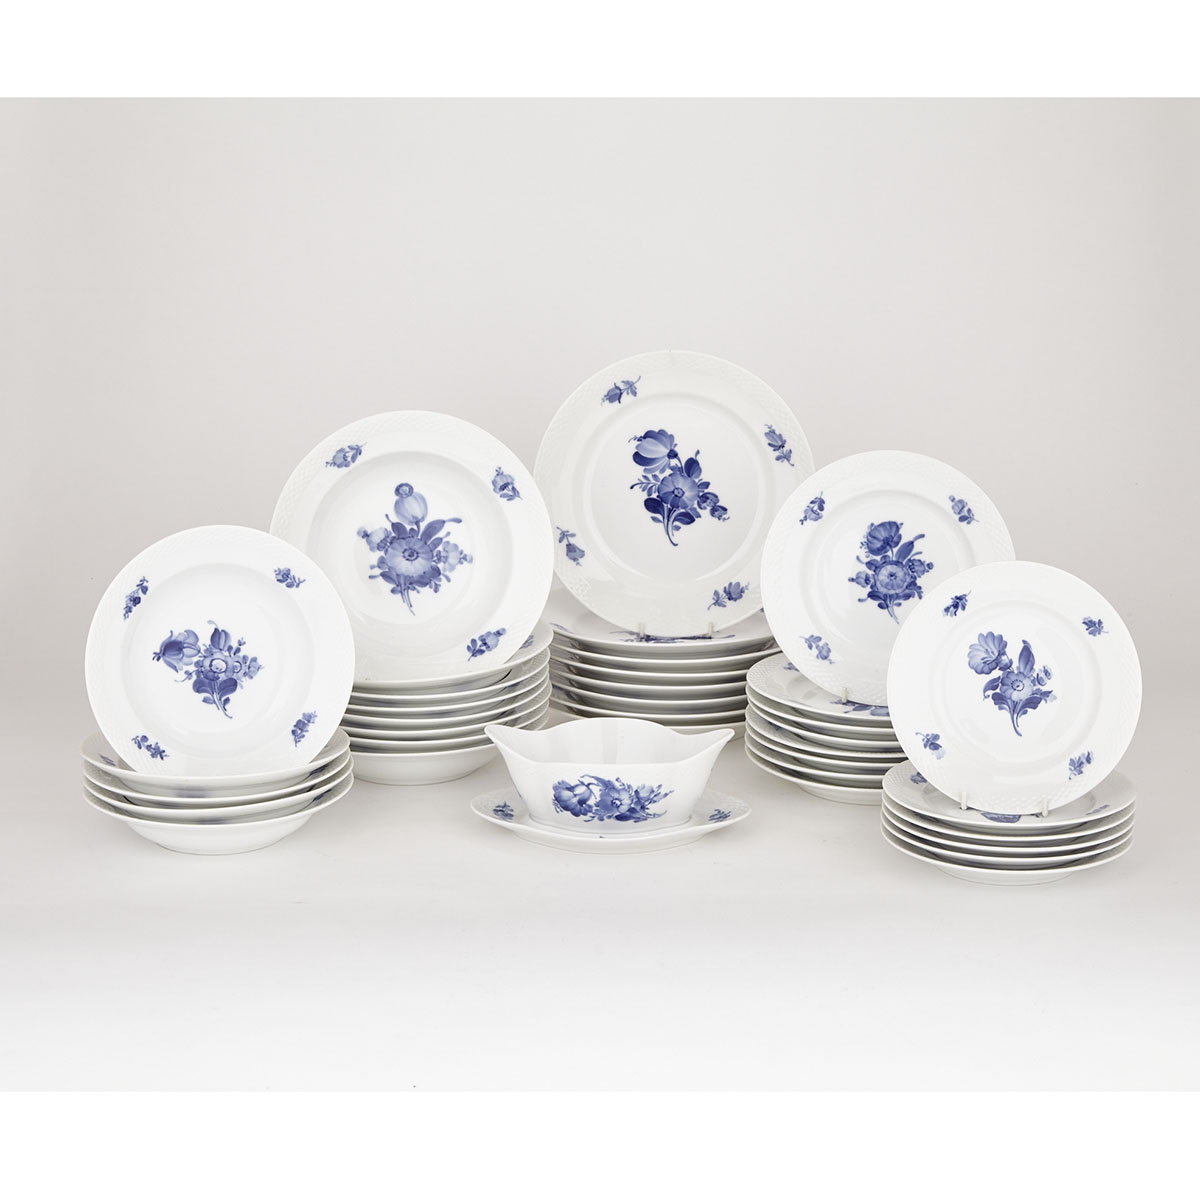 Royal Copenhagen ‘Blue Flowers’ Pattern Service, 20th century